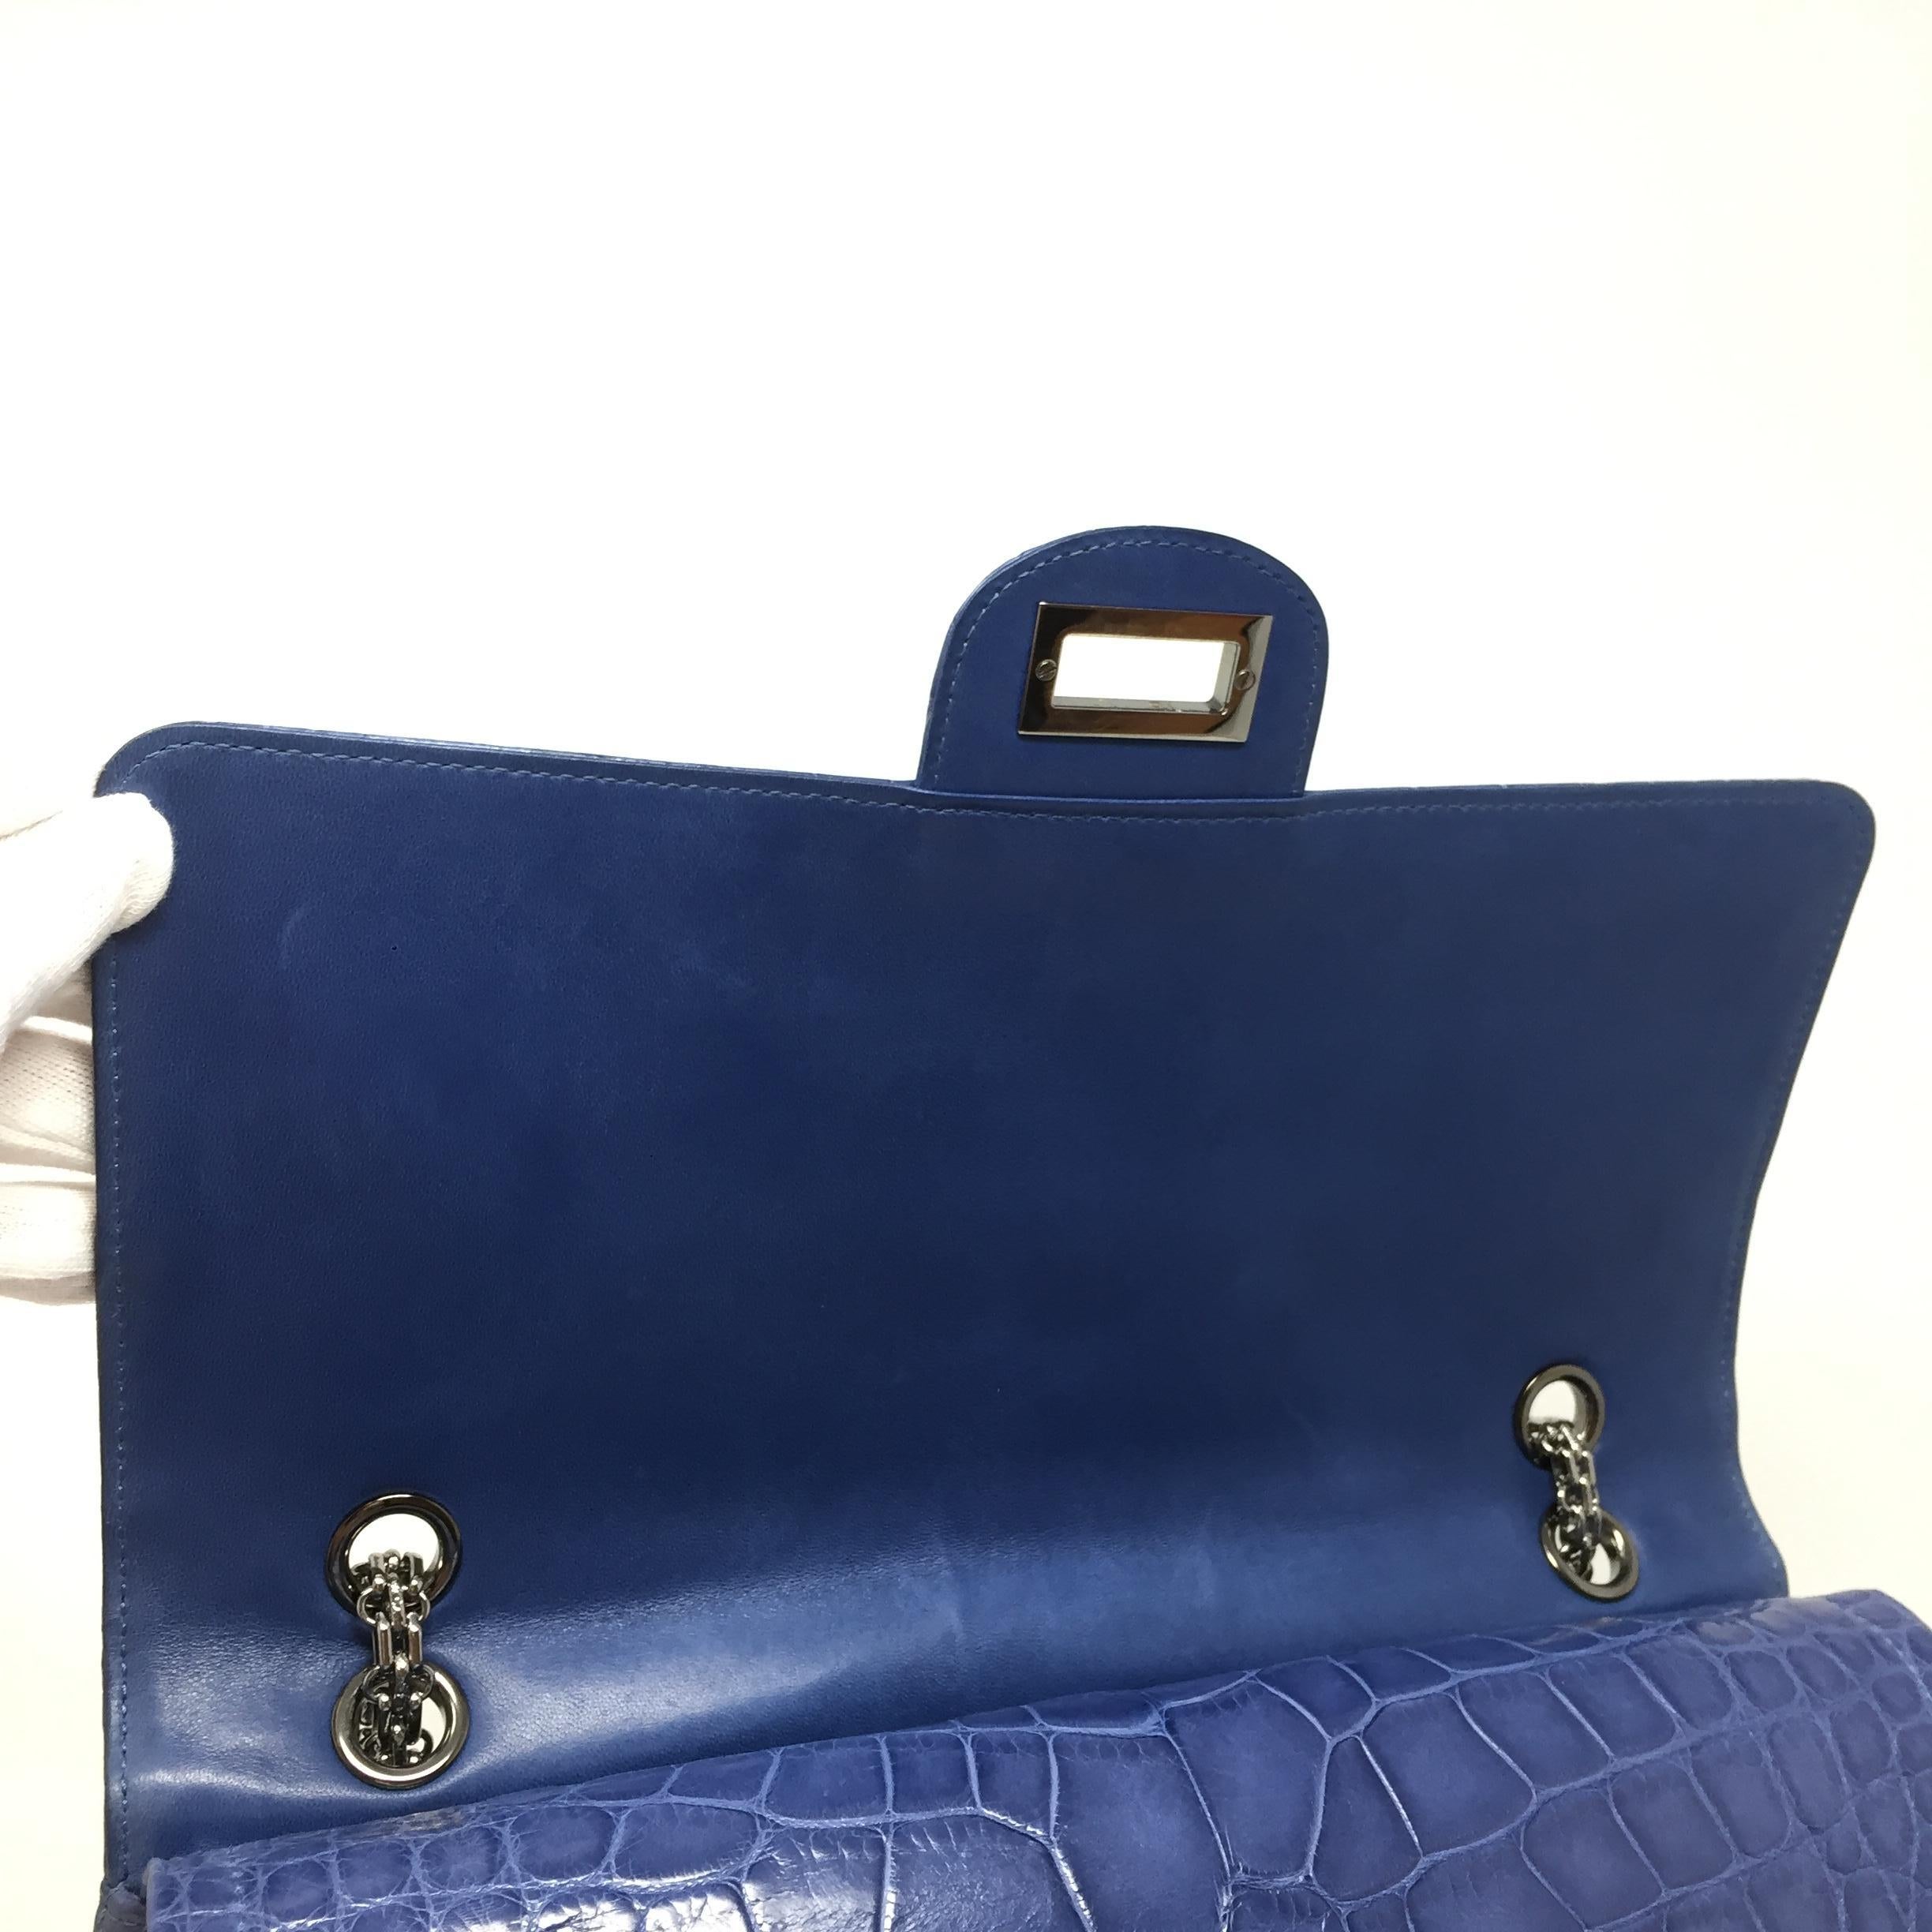 Chanel Bag Blue Shine Crocodile 2.55 Reissue Double Flap Timeless Bag, 2012 5